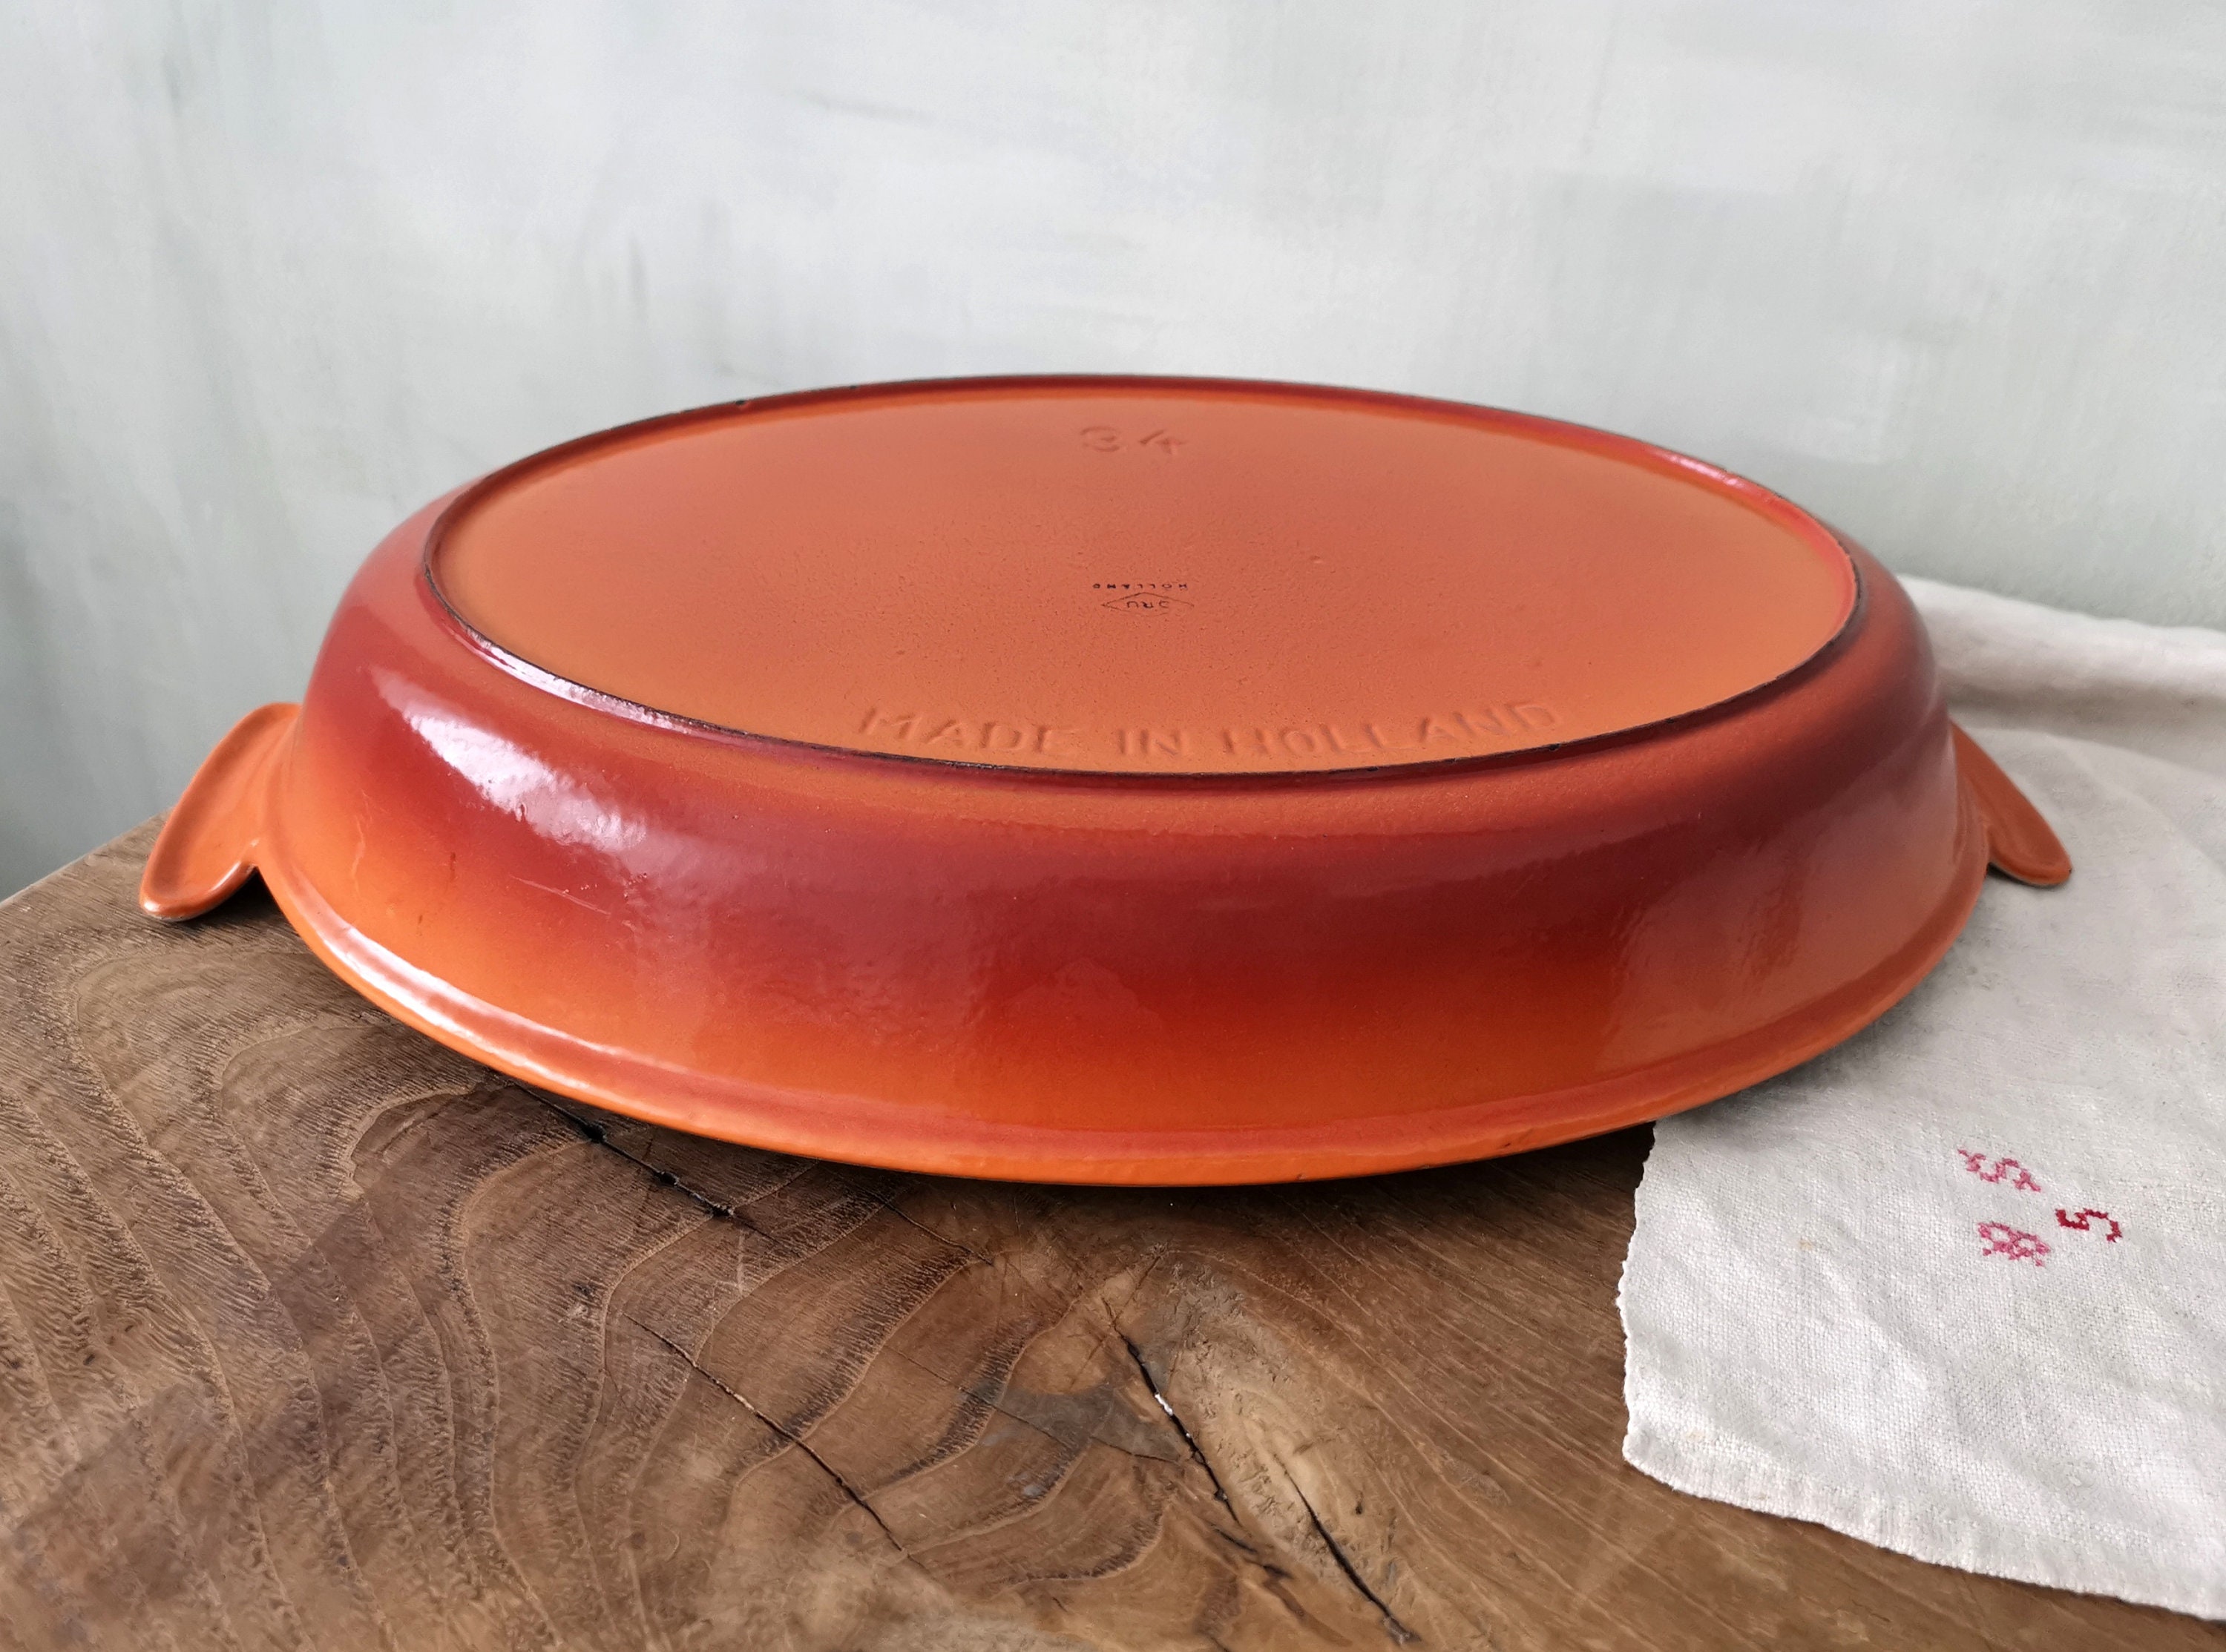 large french roasting pan size 34 made in holland, white orange fonte oval, vintage baking pan